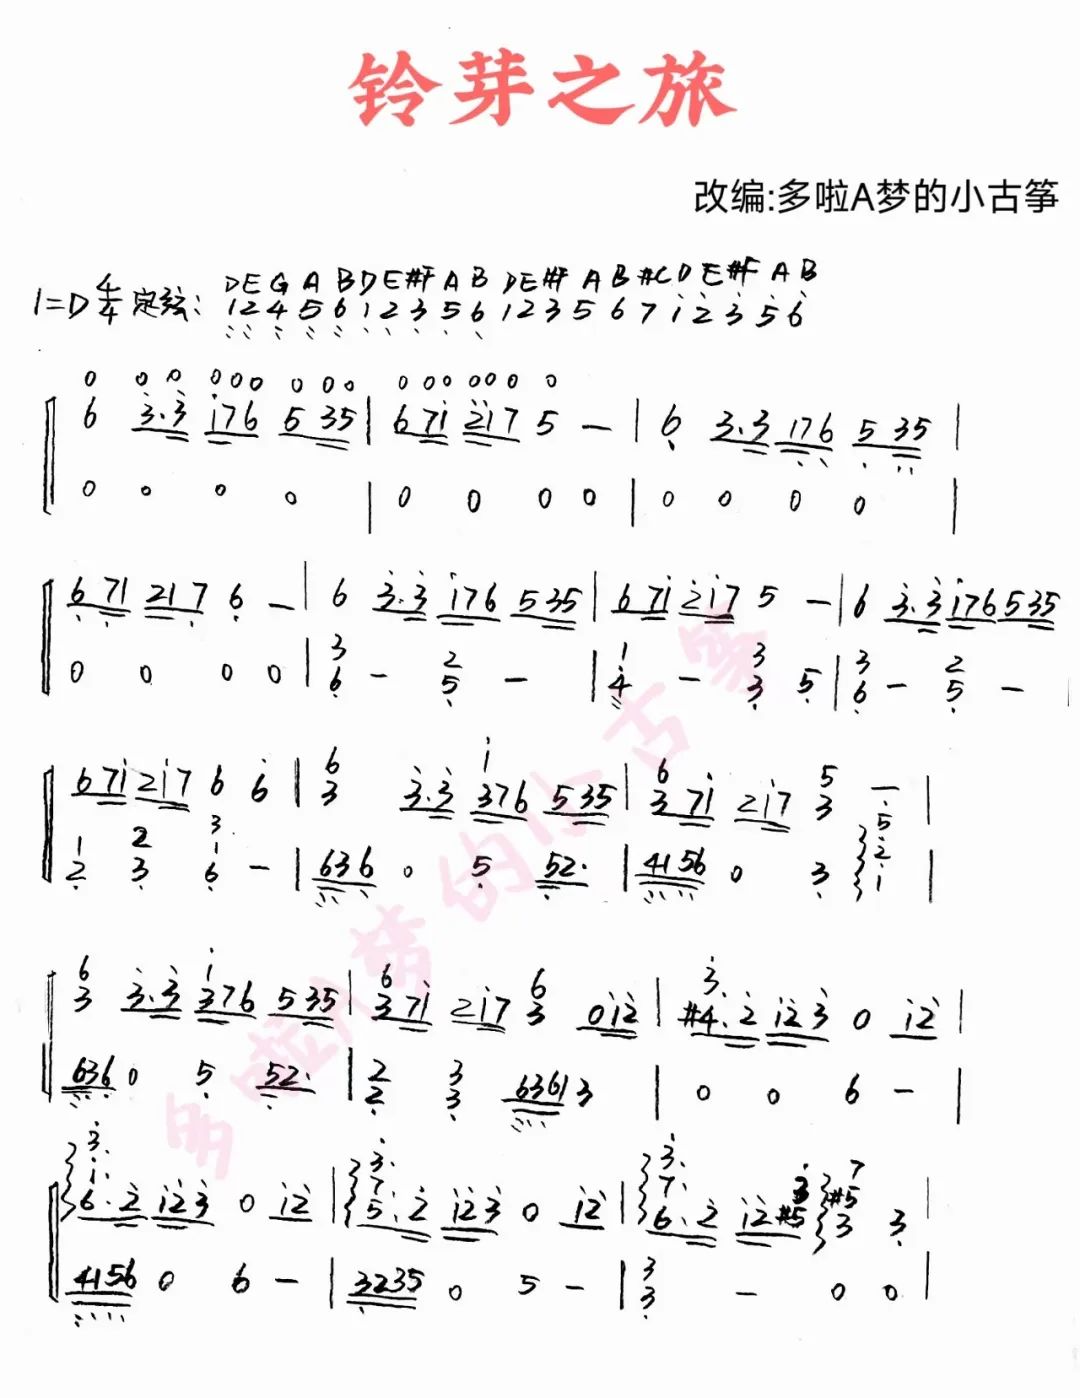 Tour of Bell and Bud（guzheng sheet music）